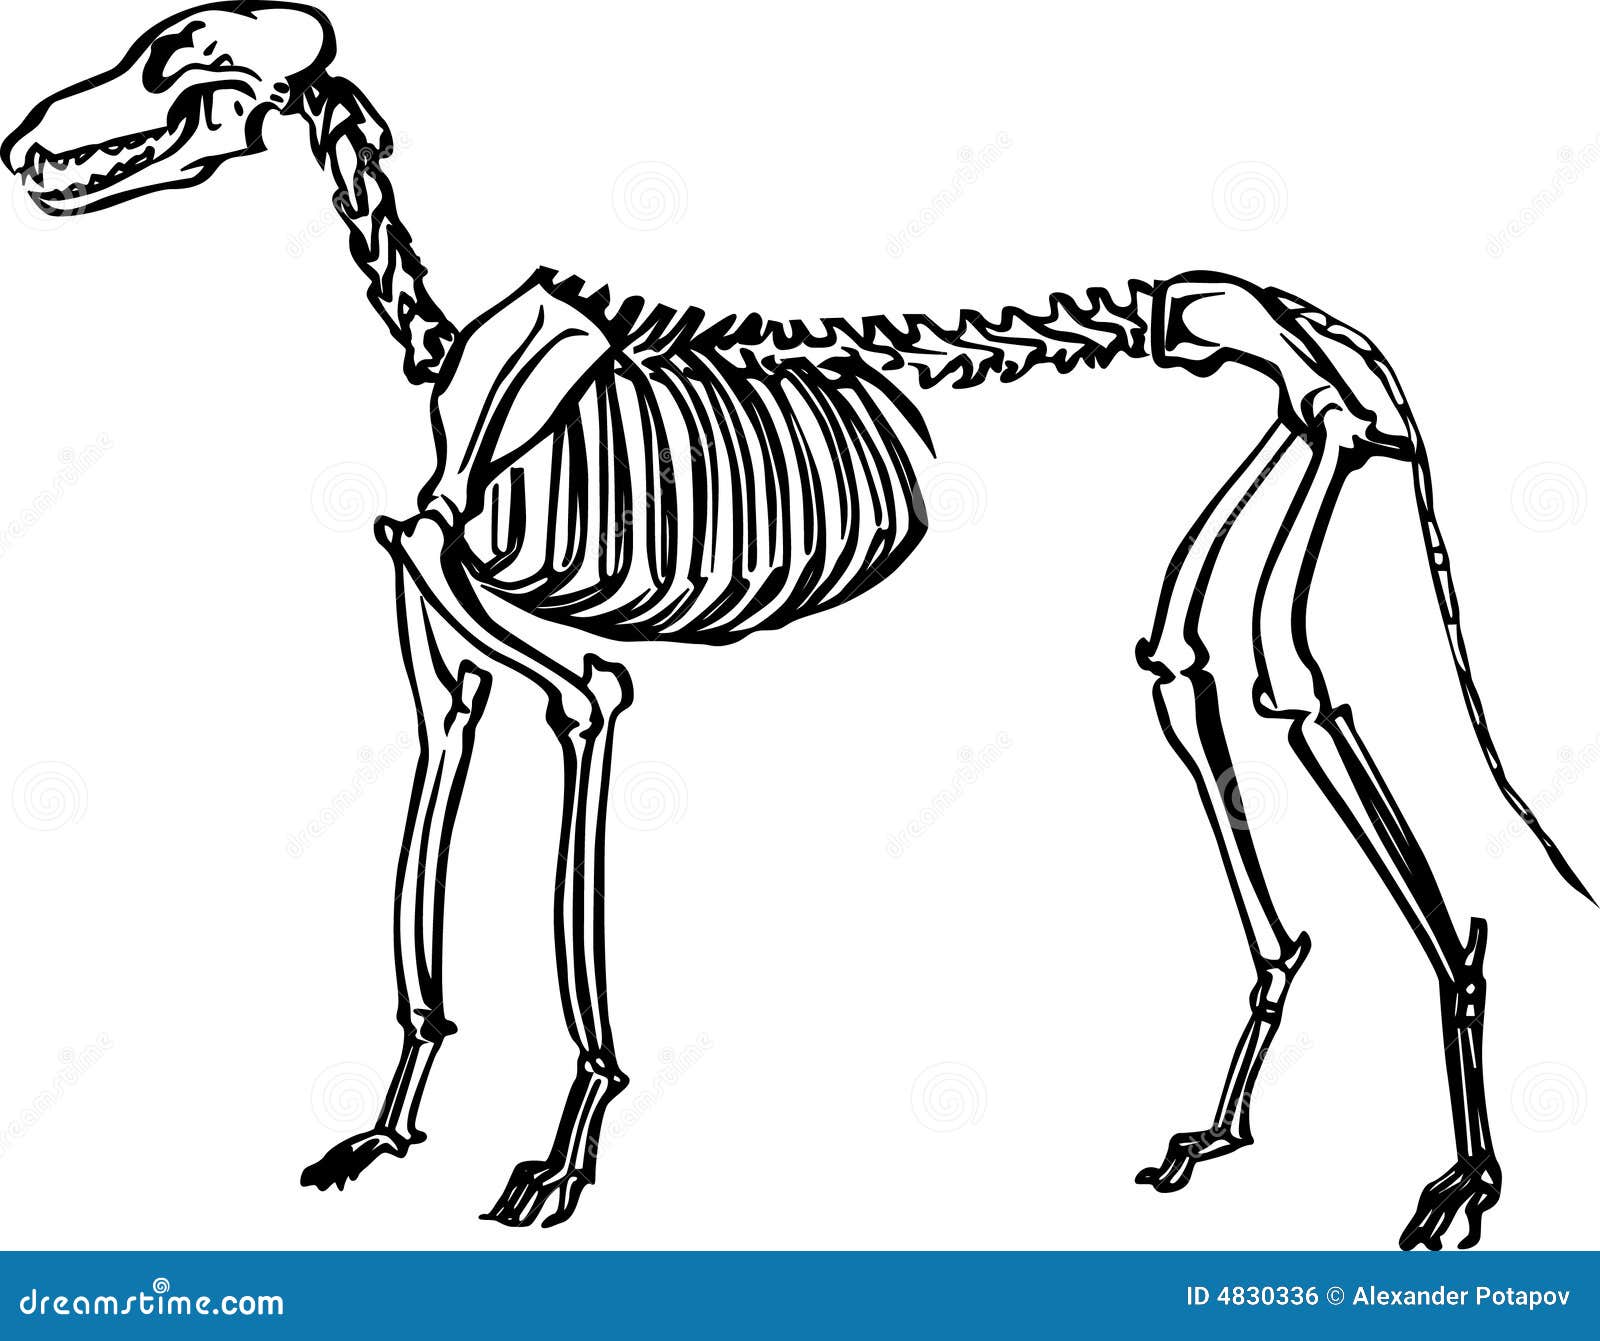 clipart horse skeleton - photo #29